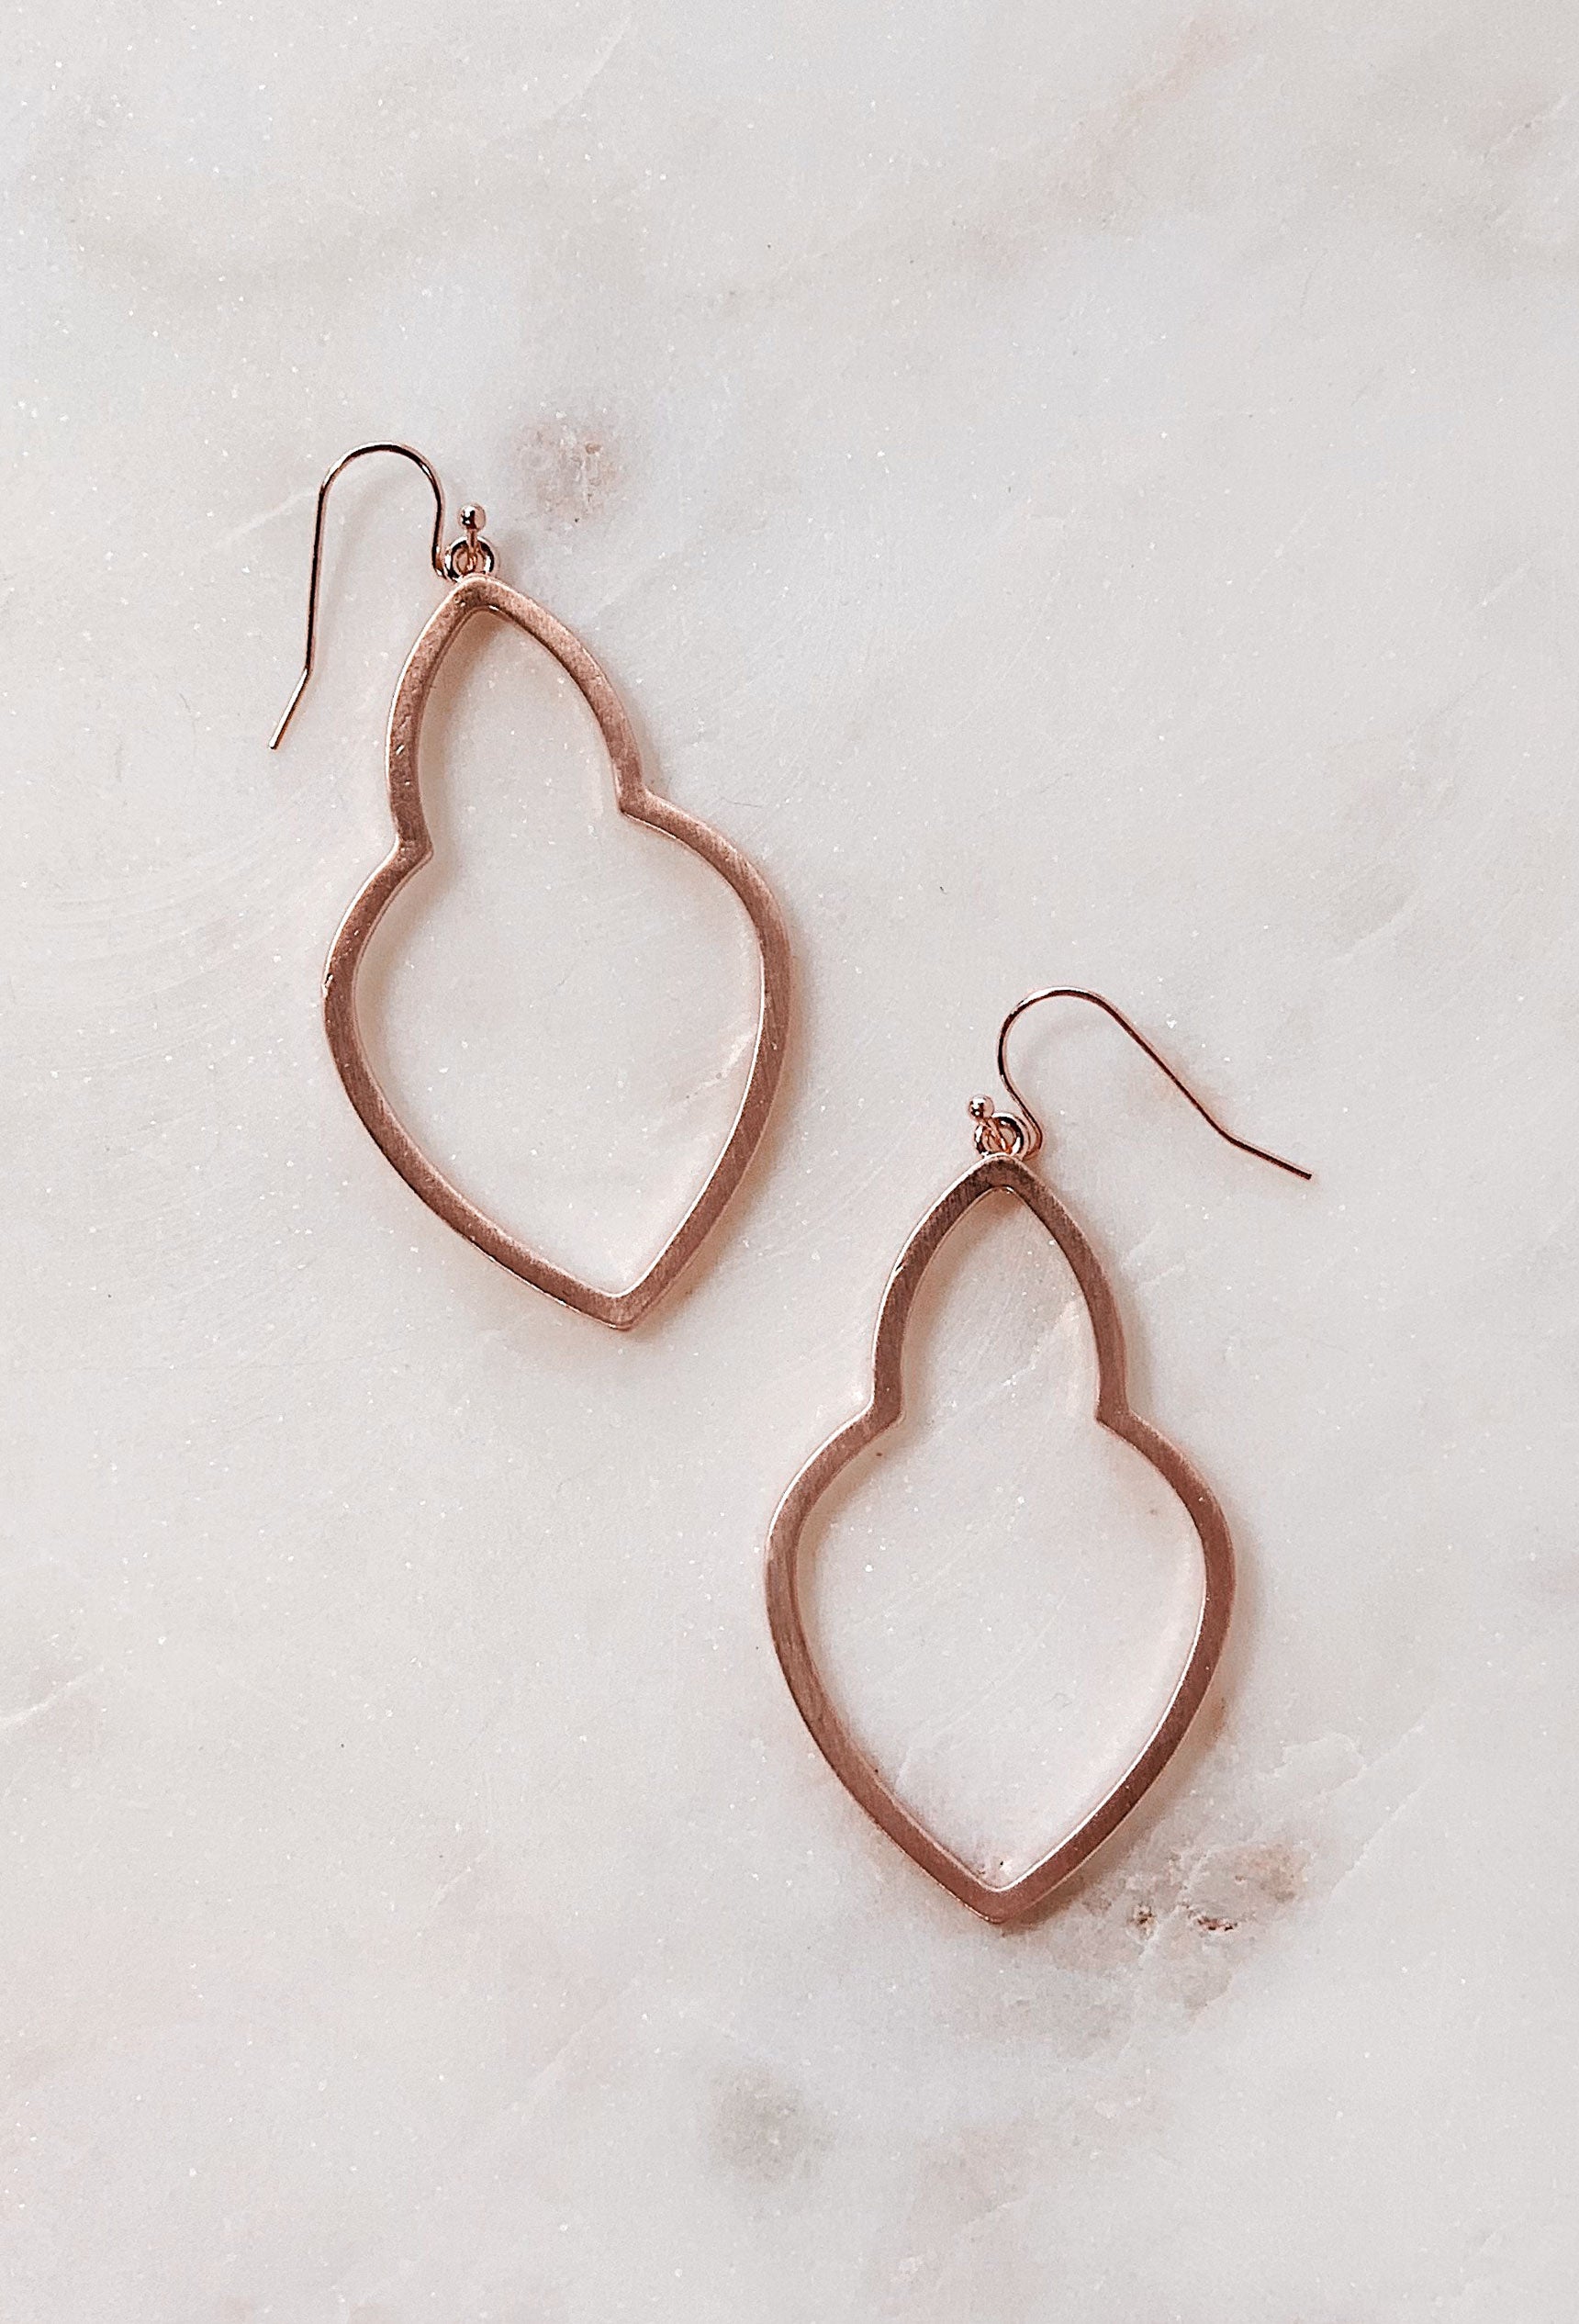 LA Earrings The Favorite Earrings - Rose Gold, rose gold simple geometric shaped earring on hook backing 